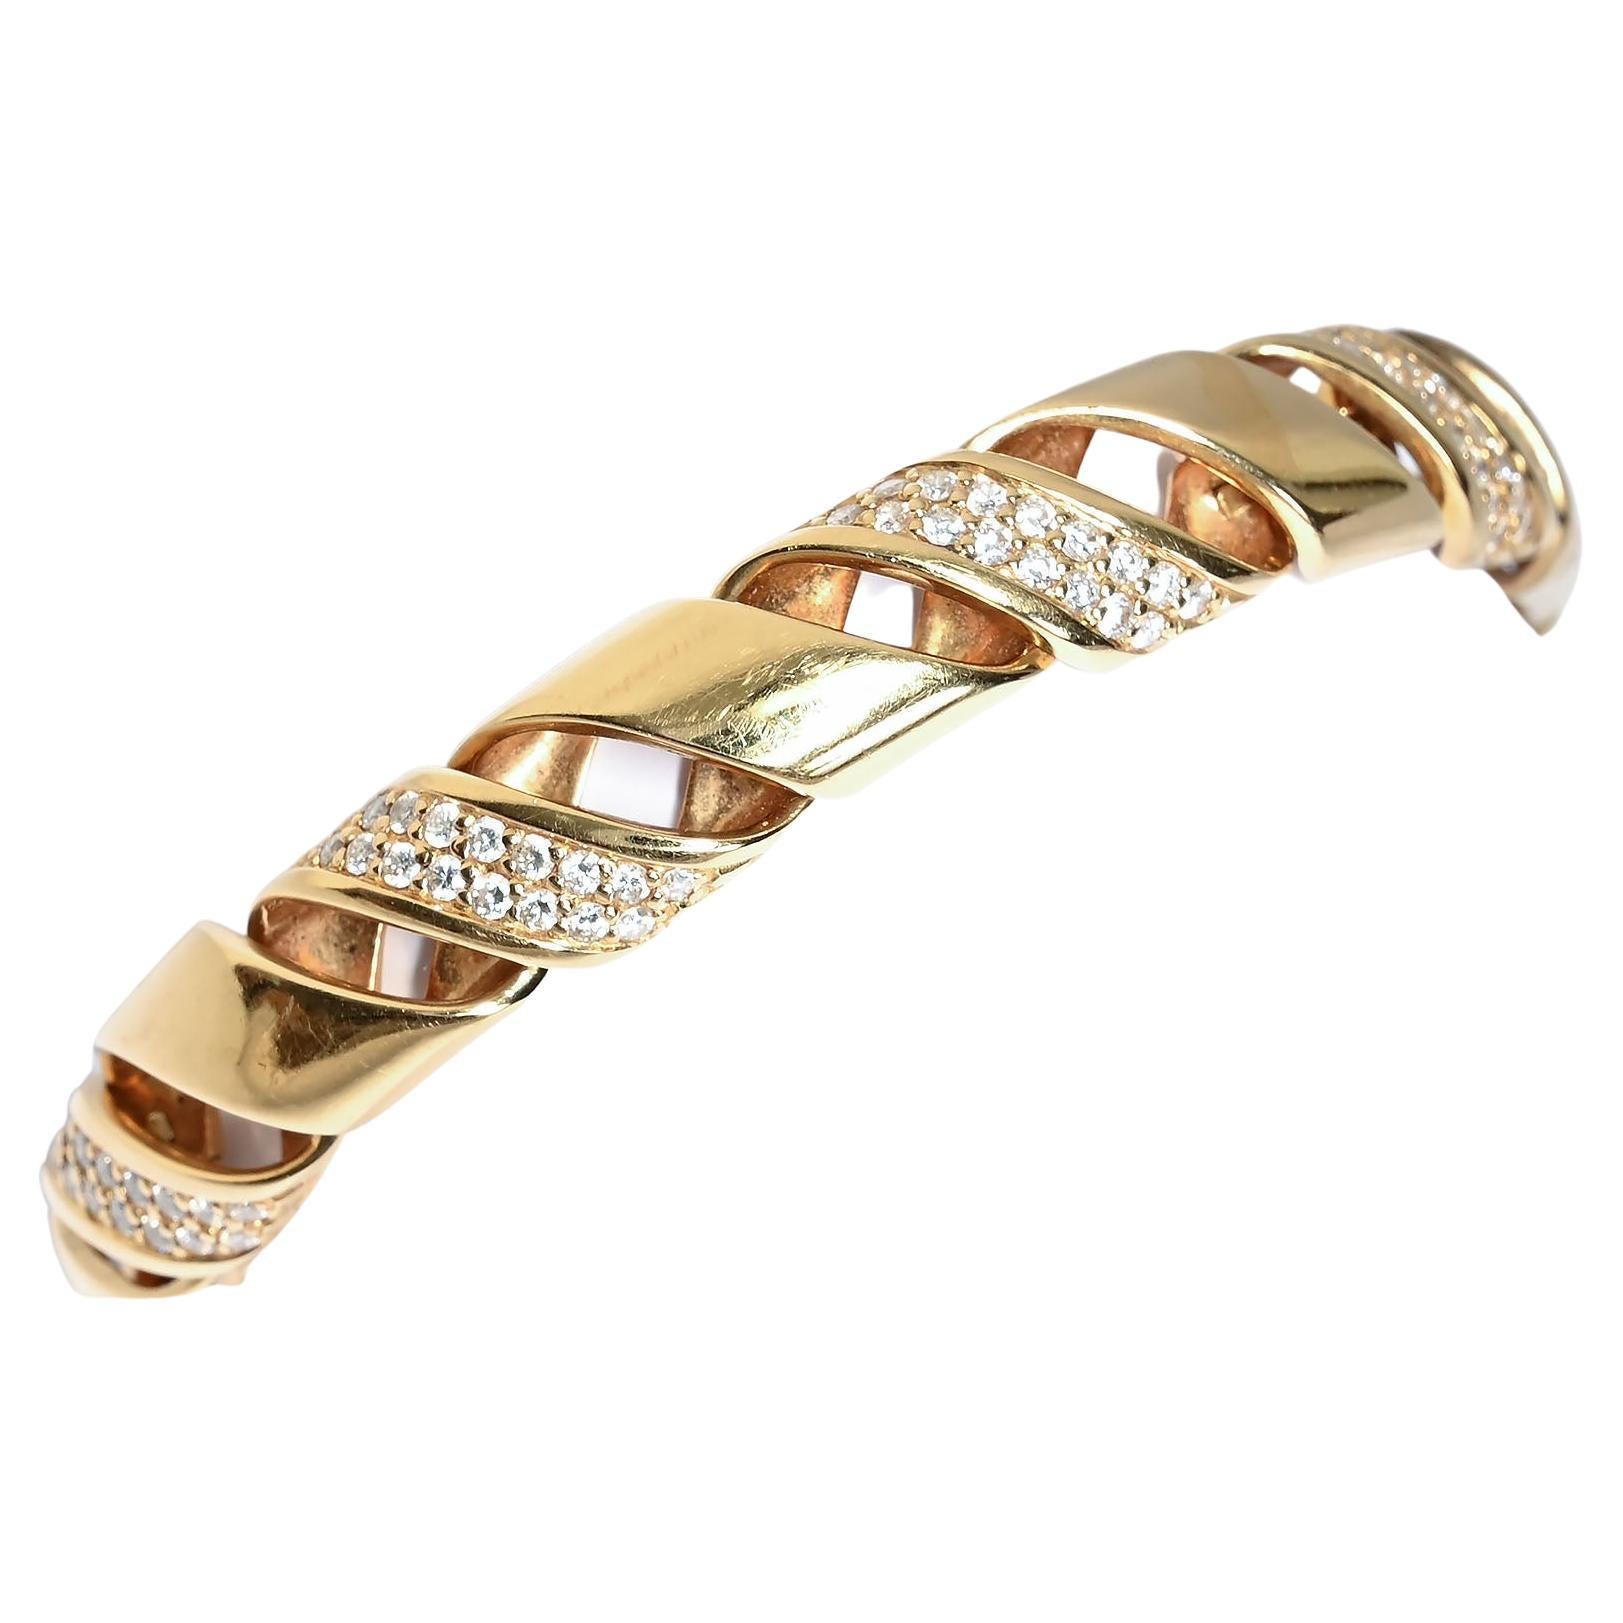 Gold and Diamond Woven Bracelet